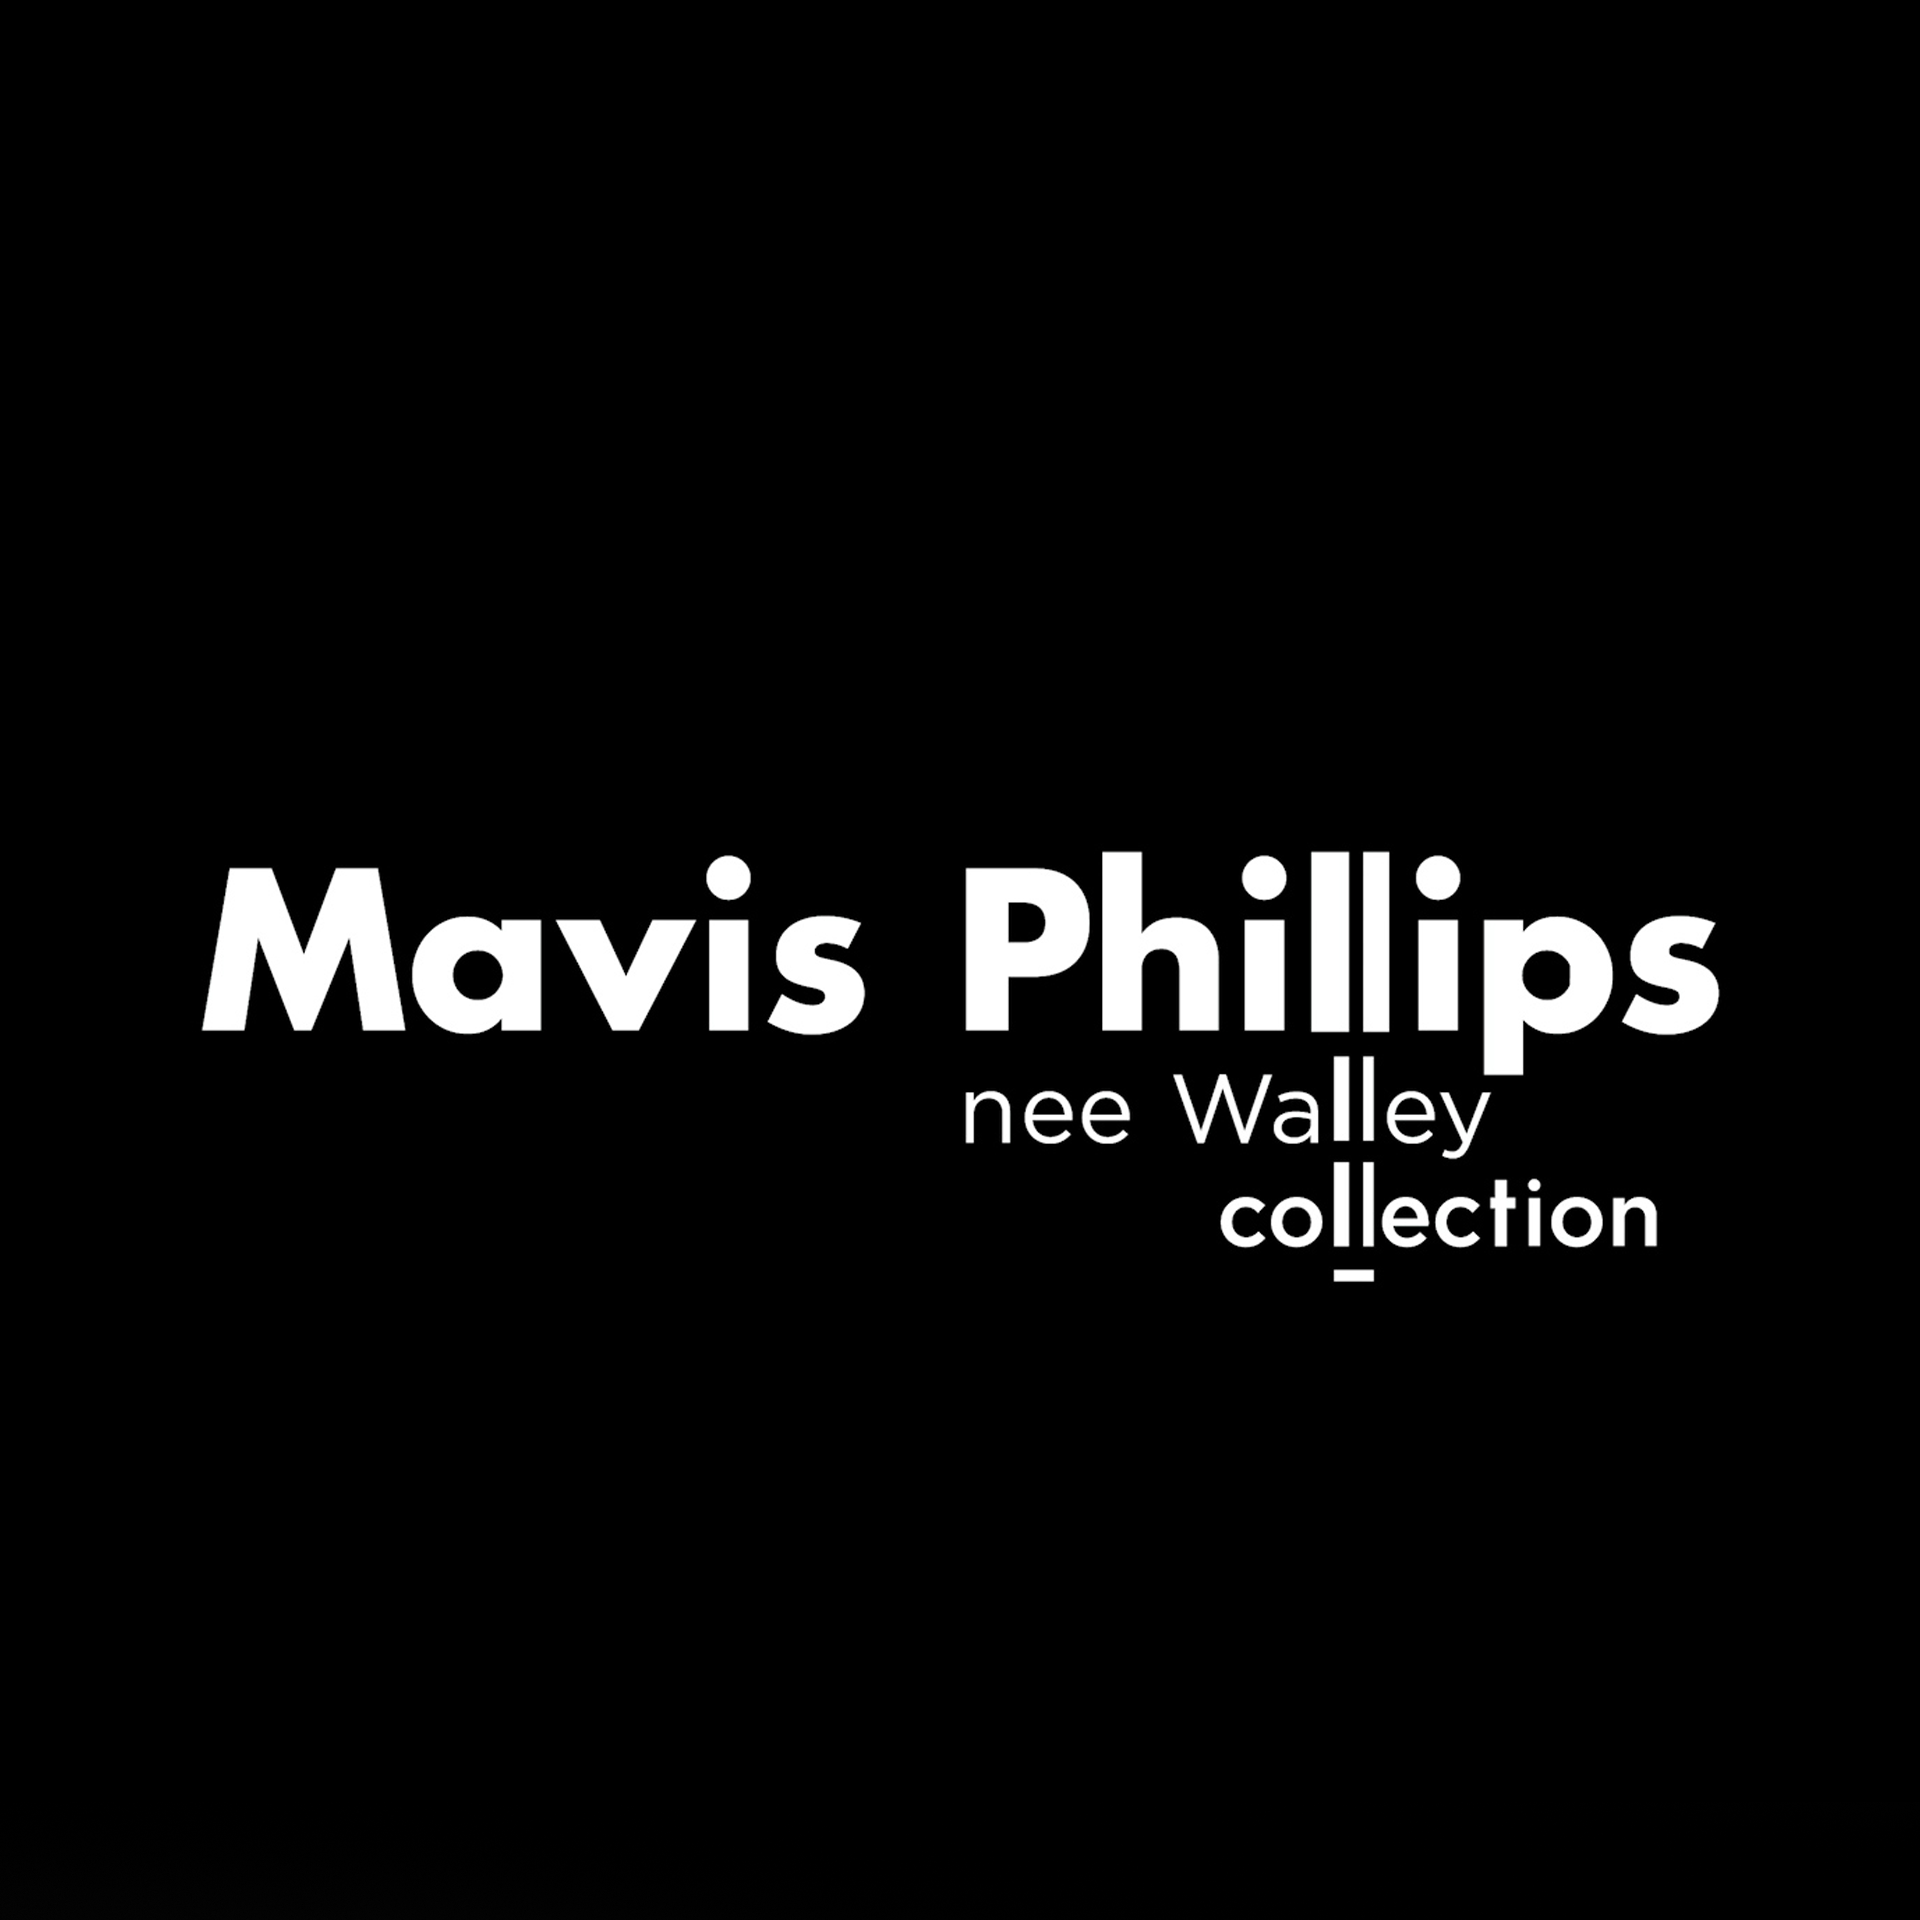 The Mavis Phillips (nee Walley) Collection.